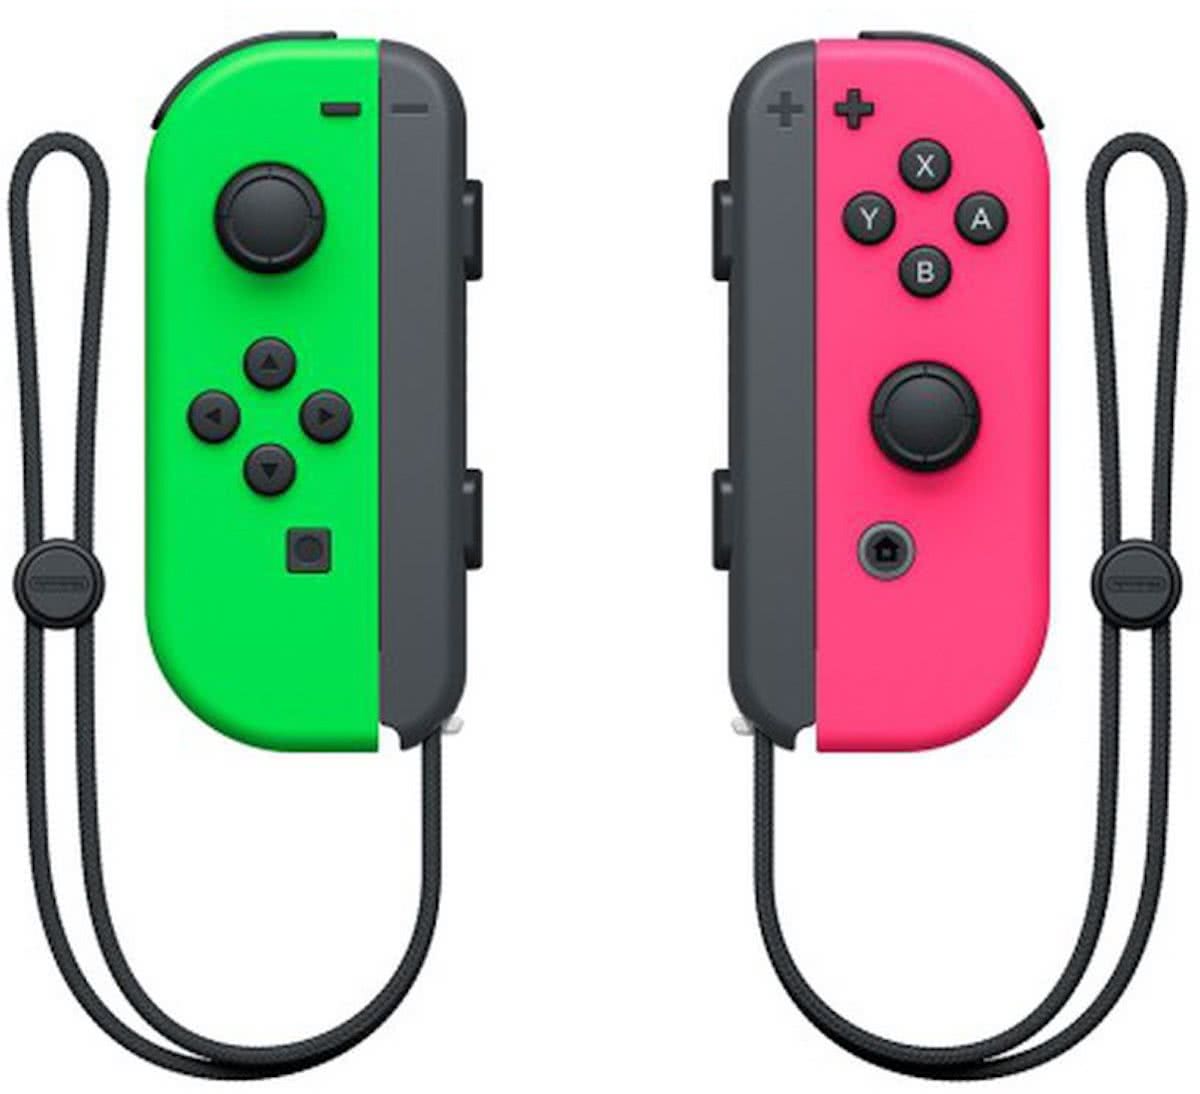 Joy-Con Controller Pair (Neon Green / Neon Purple) Nintendo Switch